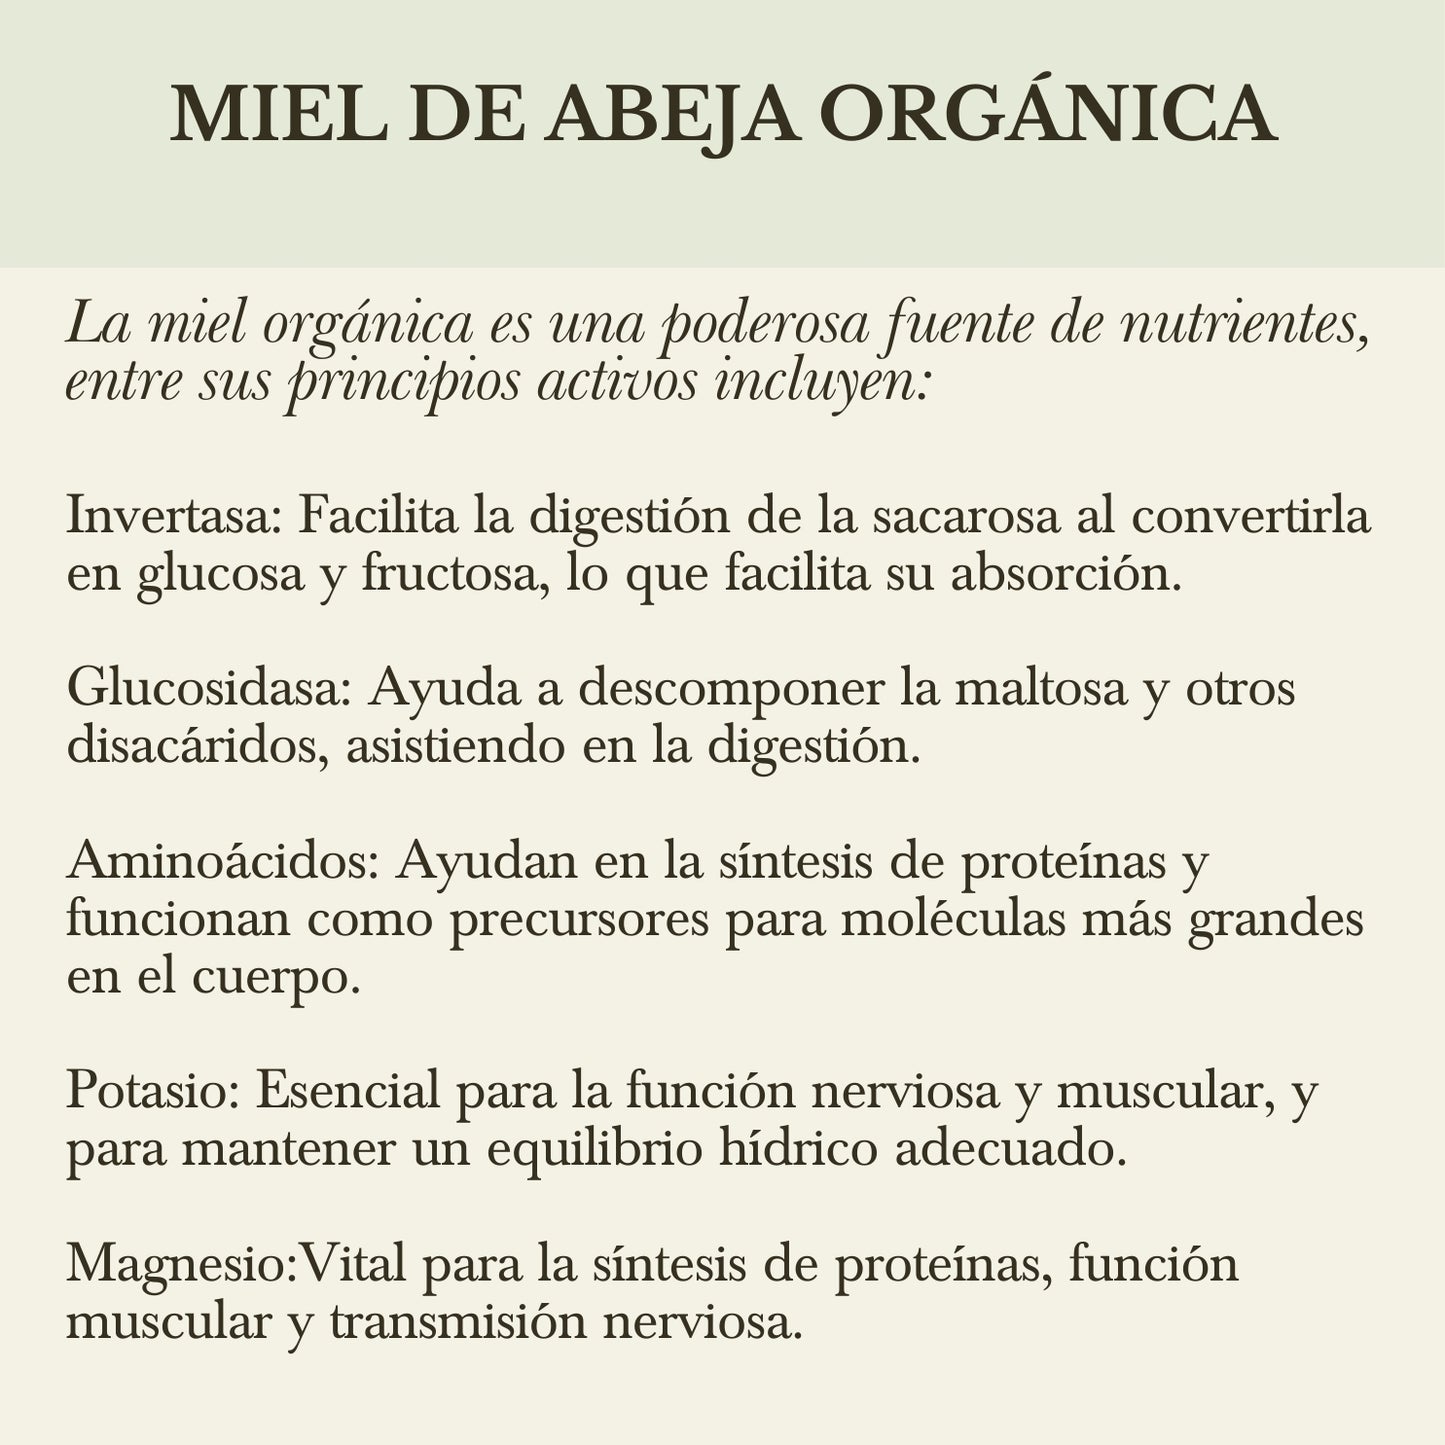 x. MIEL MANTEQUILLA ORGÁNICA